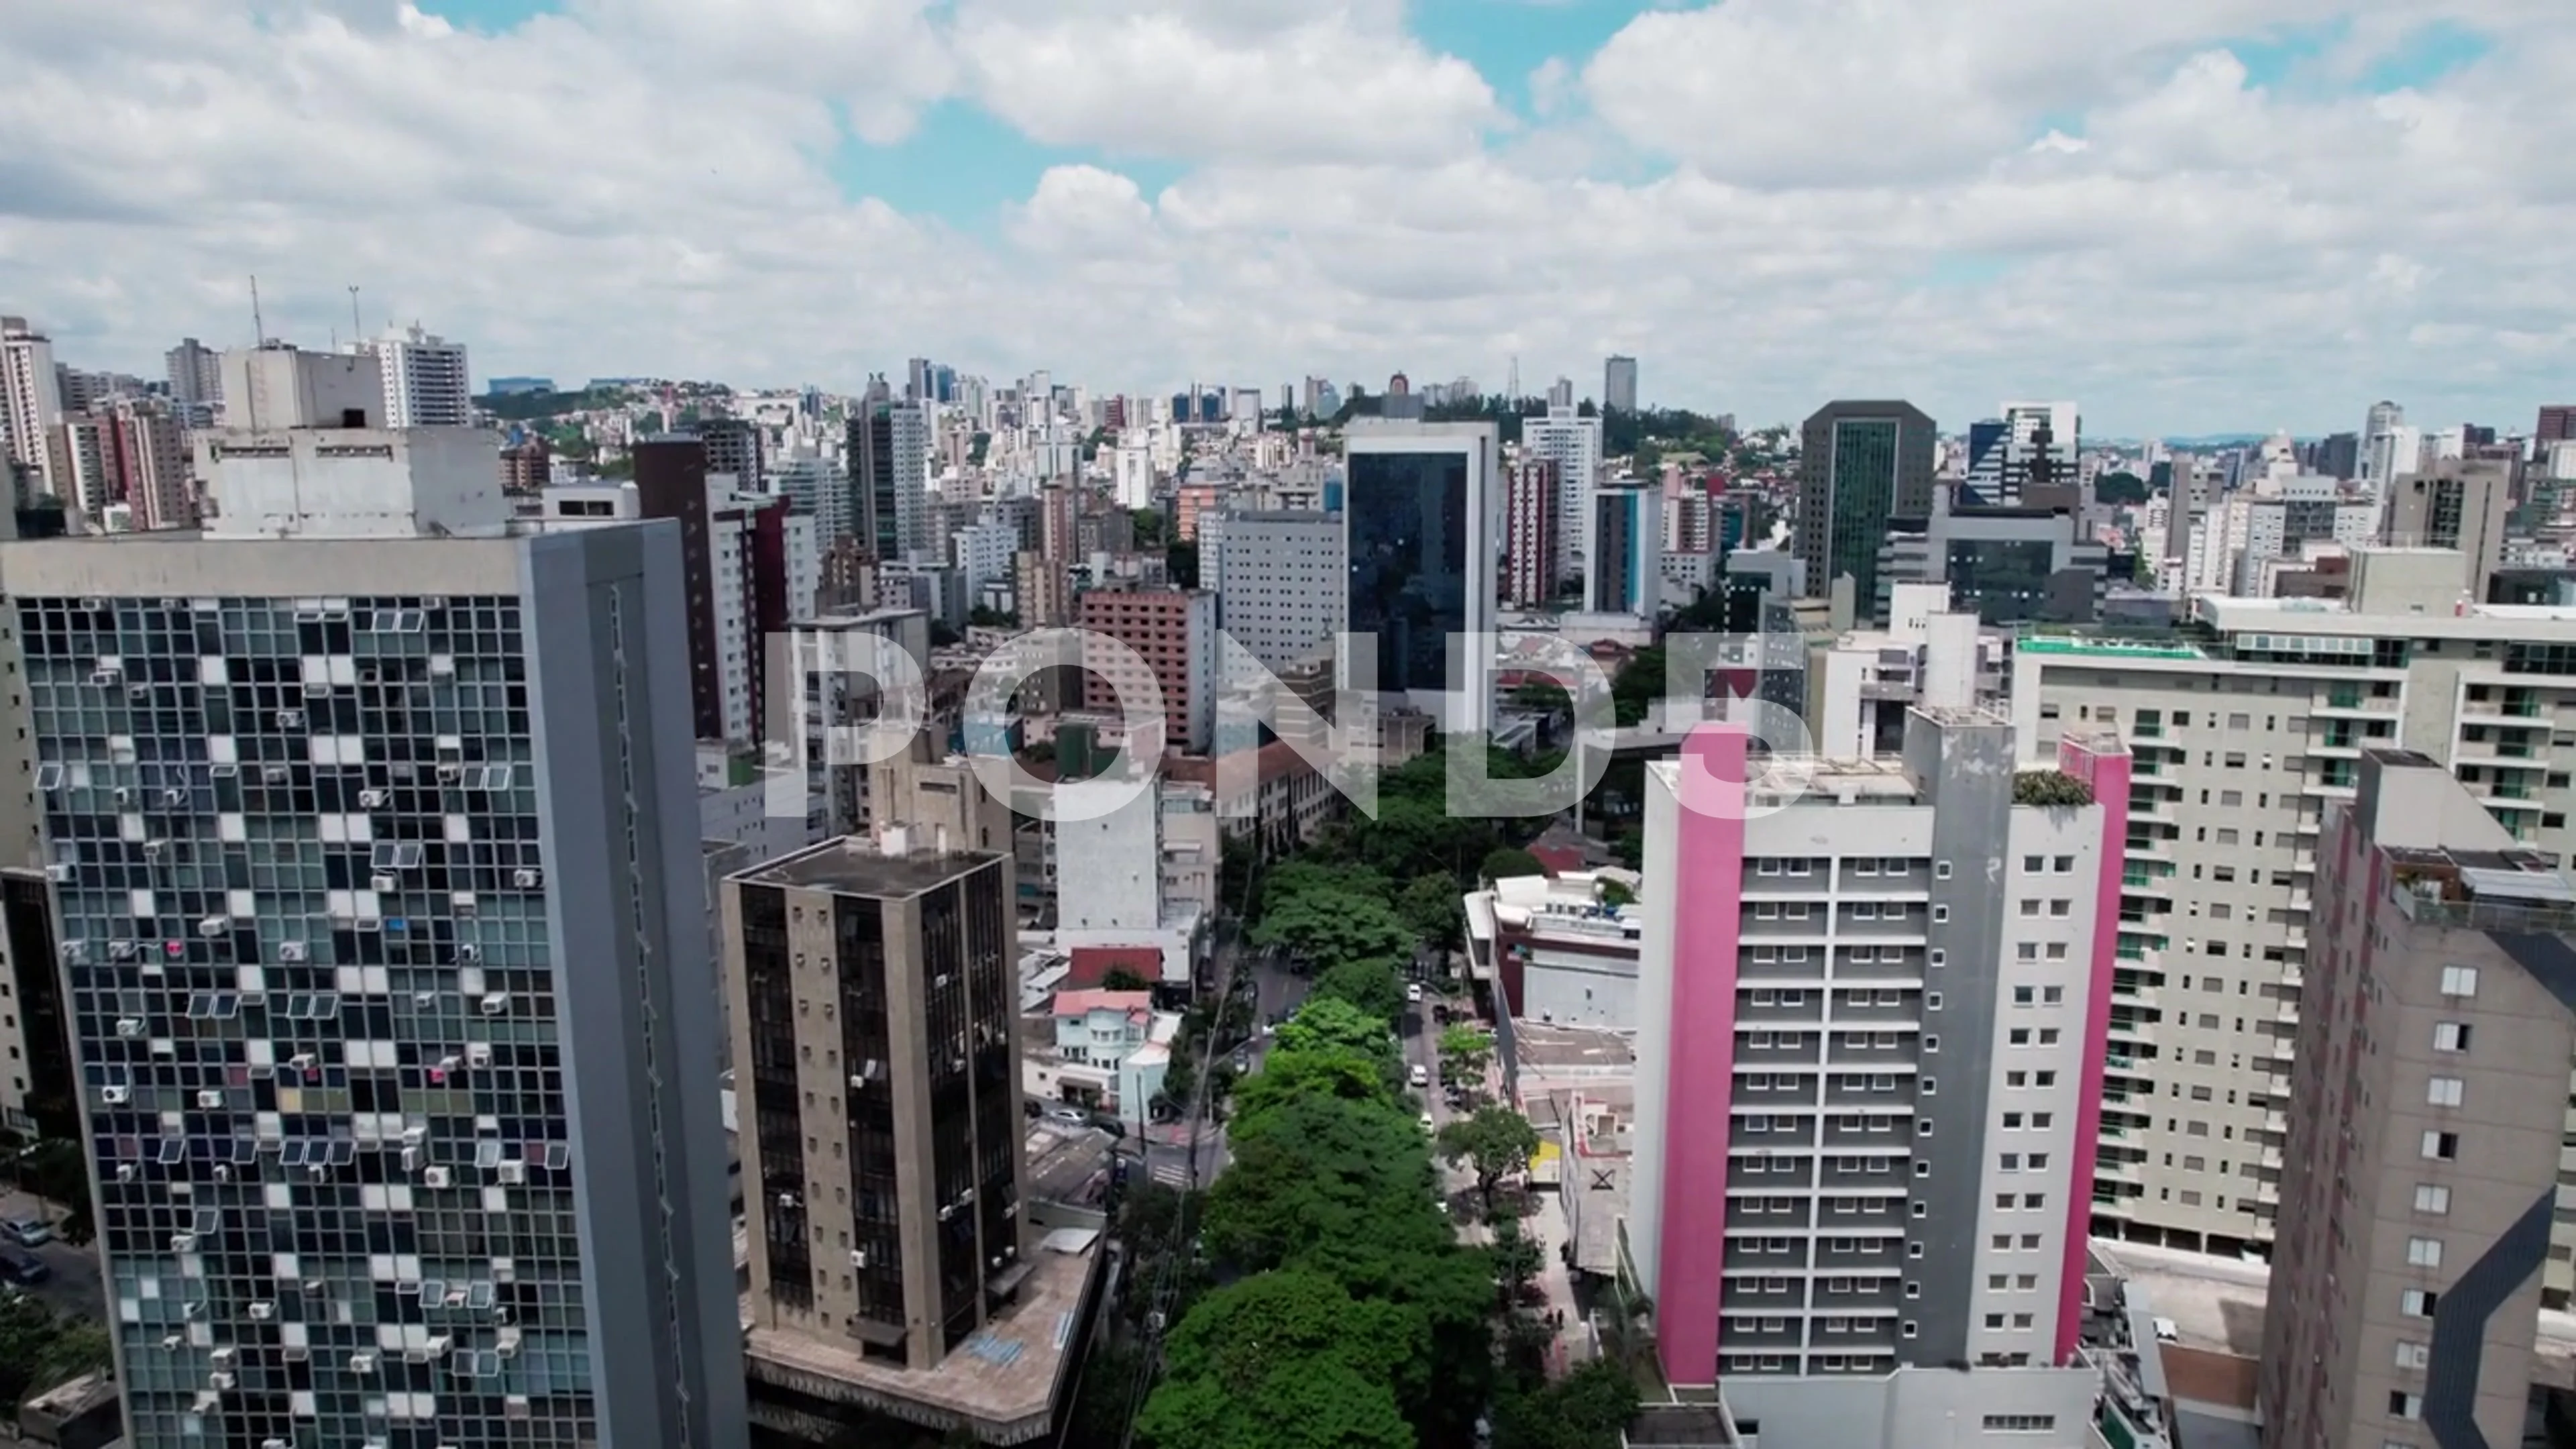 Fkk video in Belo Horizonte